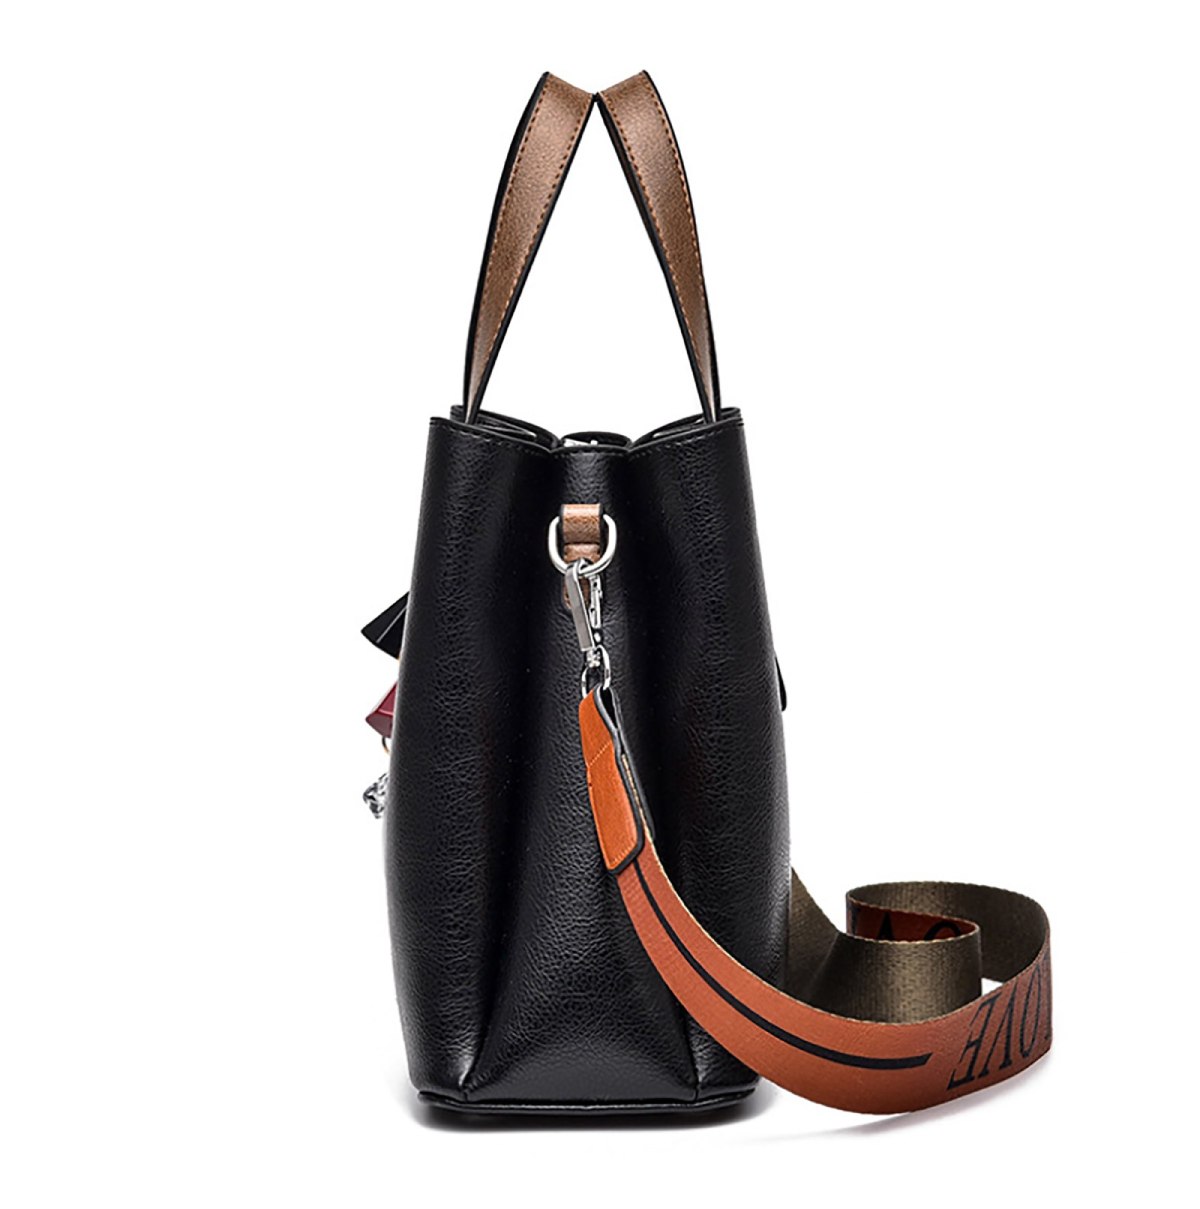 JEEP New Upgraded Luxury Leather Women Handbag